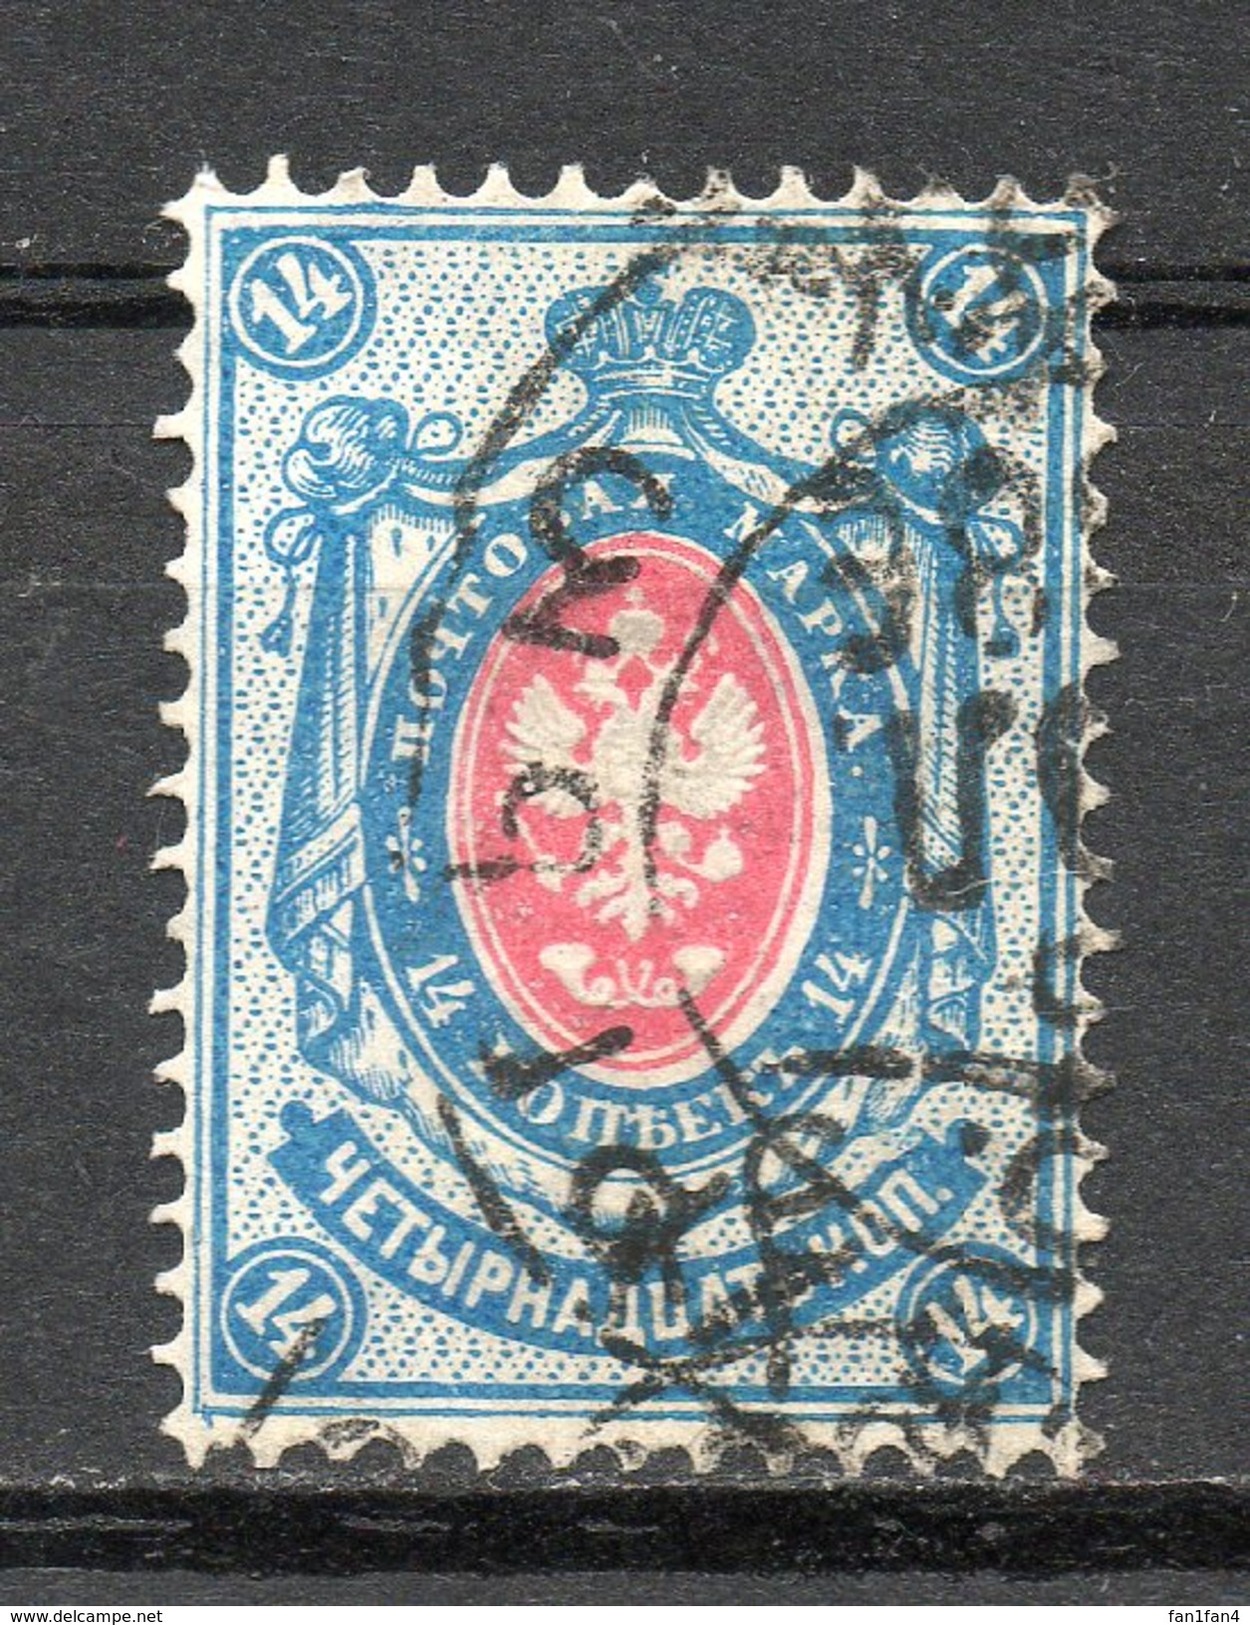 RUSSIE - 1883-85 - (Empire De Russie) - (Armoiries) - N° 33 - 14 K. Bleu Et Rose - (Vergé Horizontalement) - Gebruikt